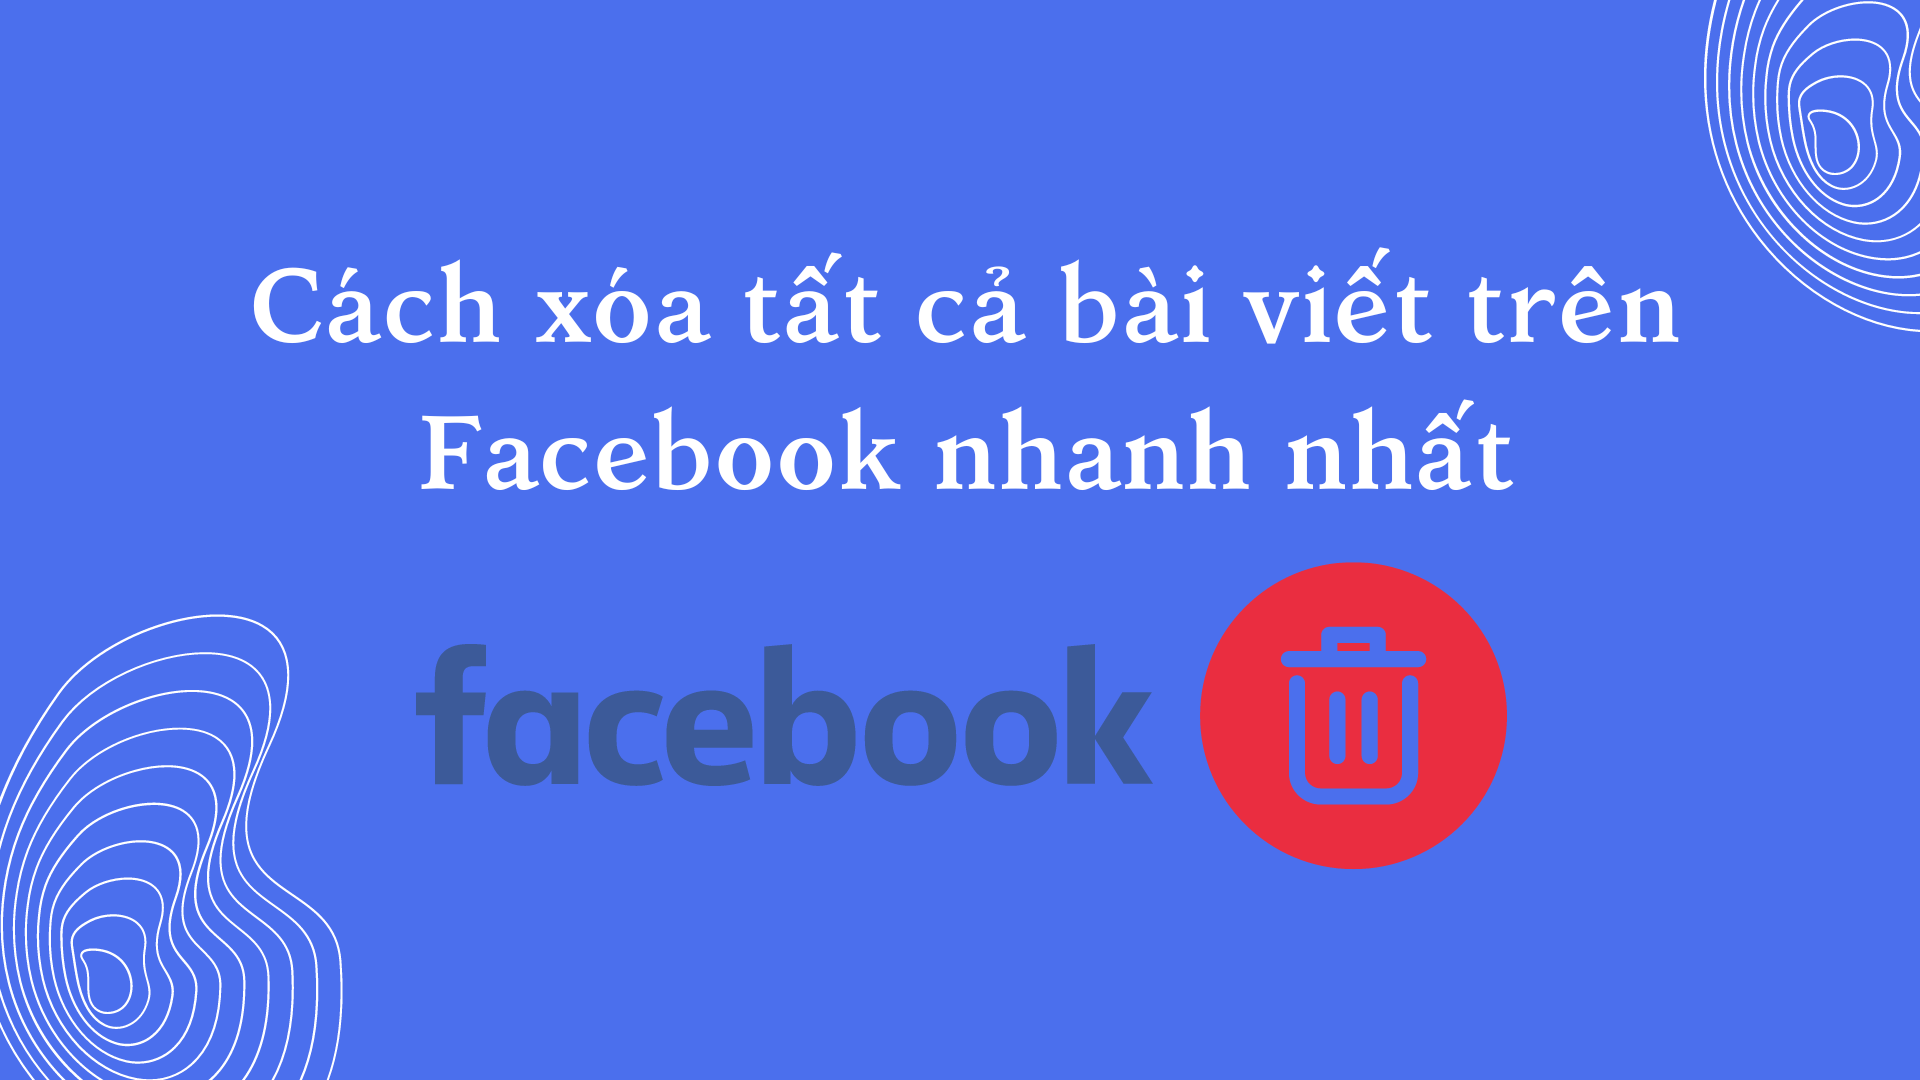 xoa-tat-ca-bai-viet-tren-facebook